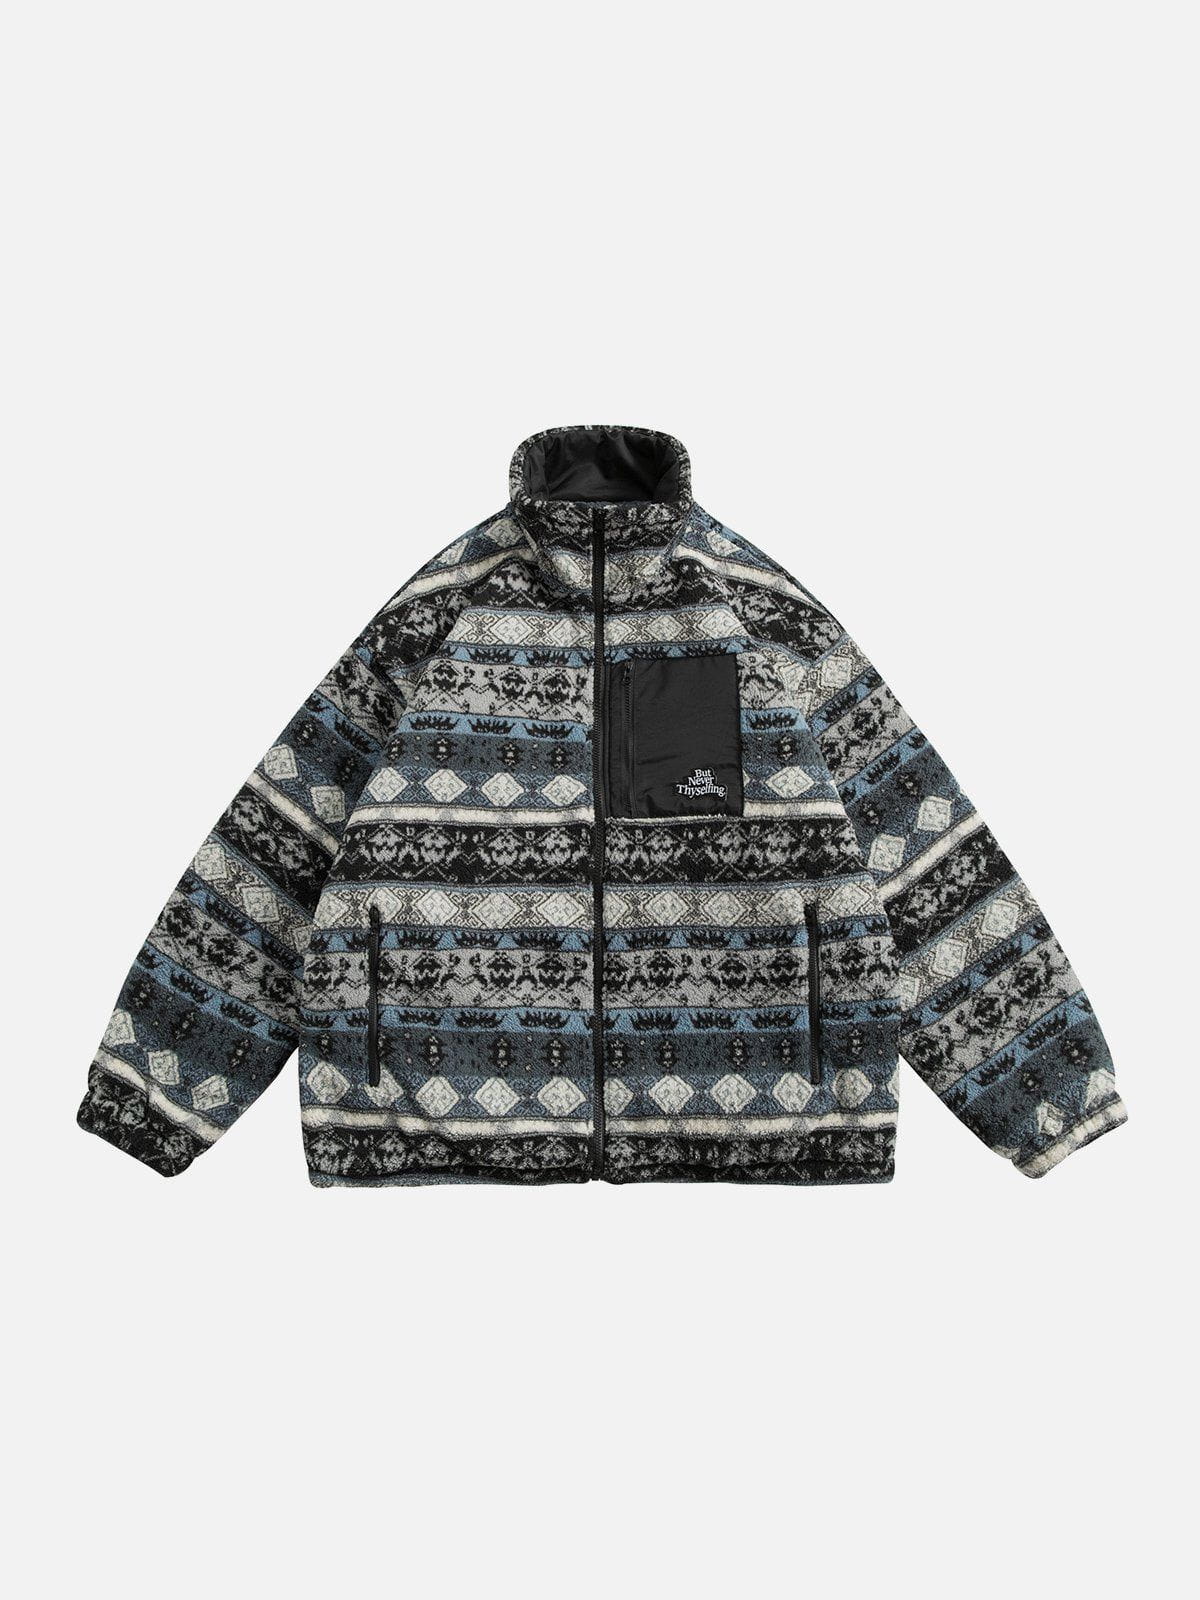 Sneakerland™ - Tribal Vintage Pattern Winter Coat